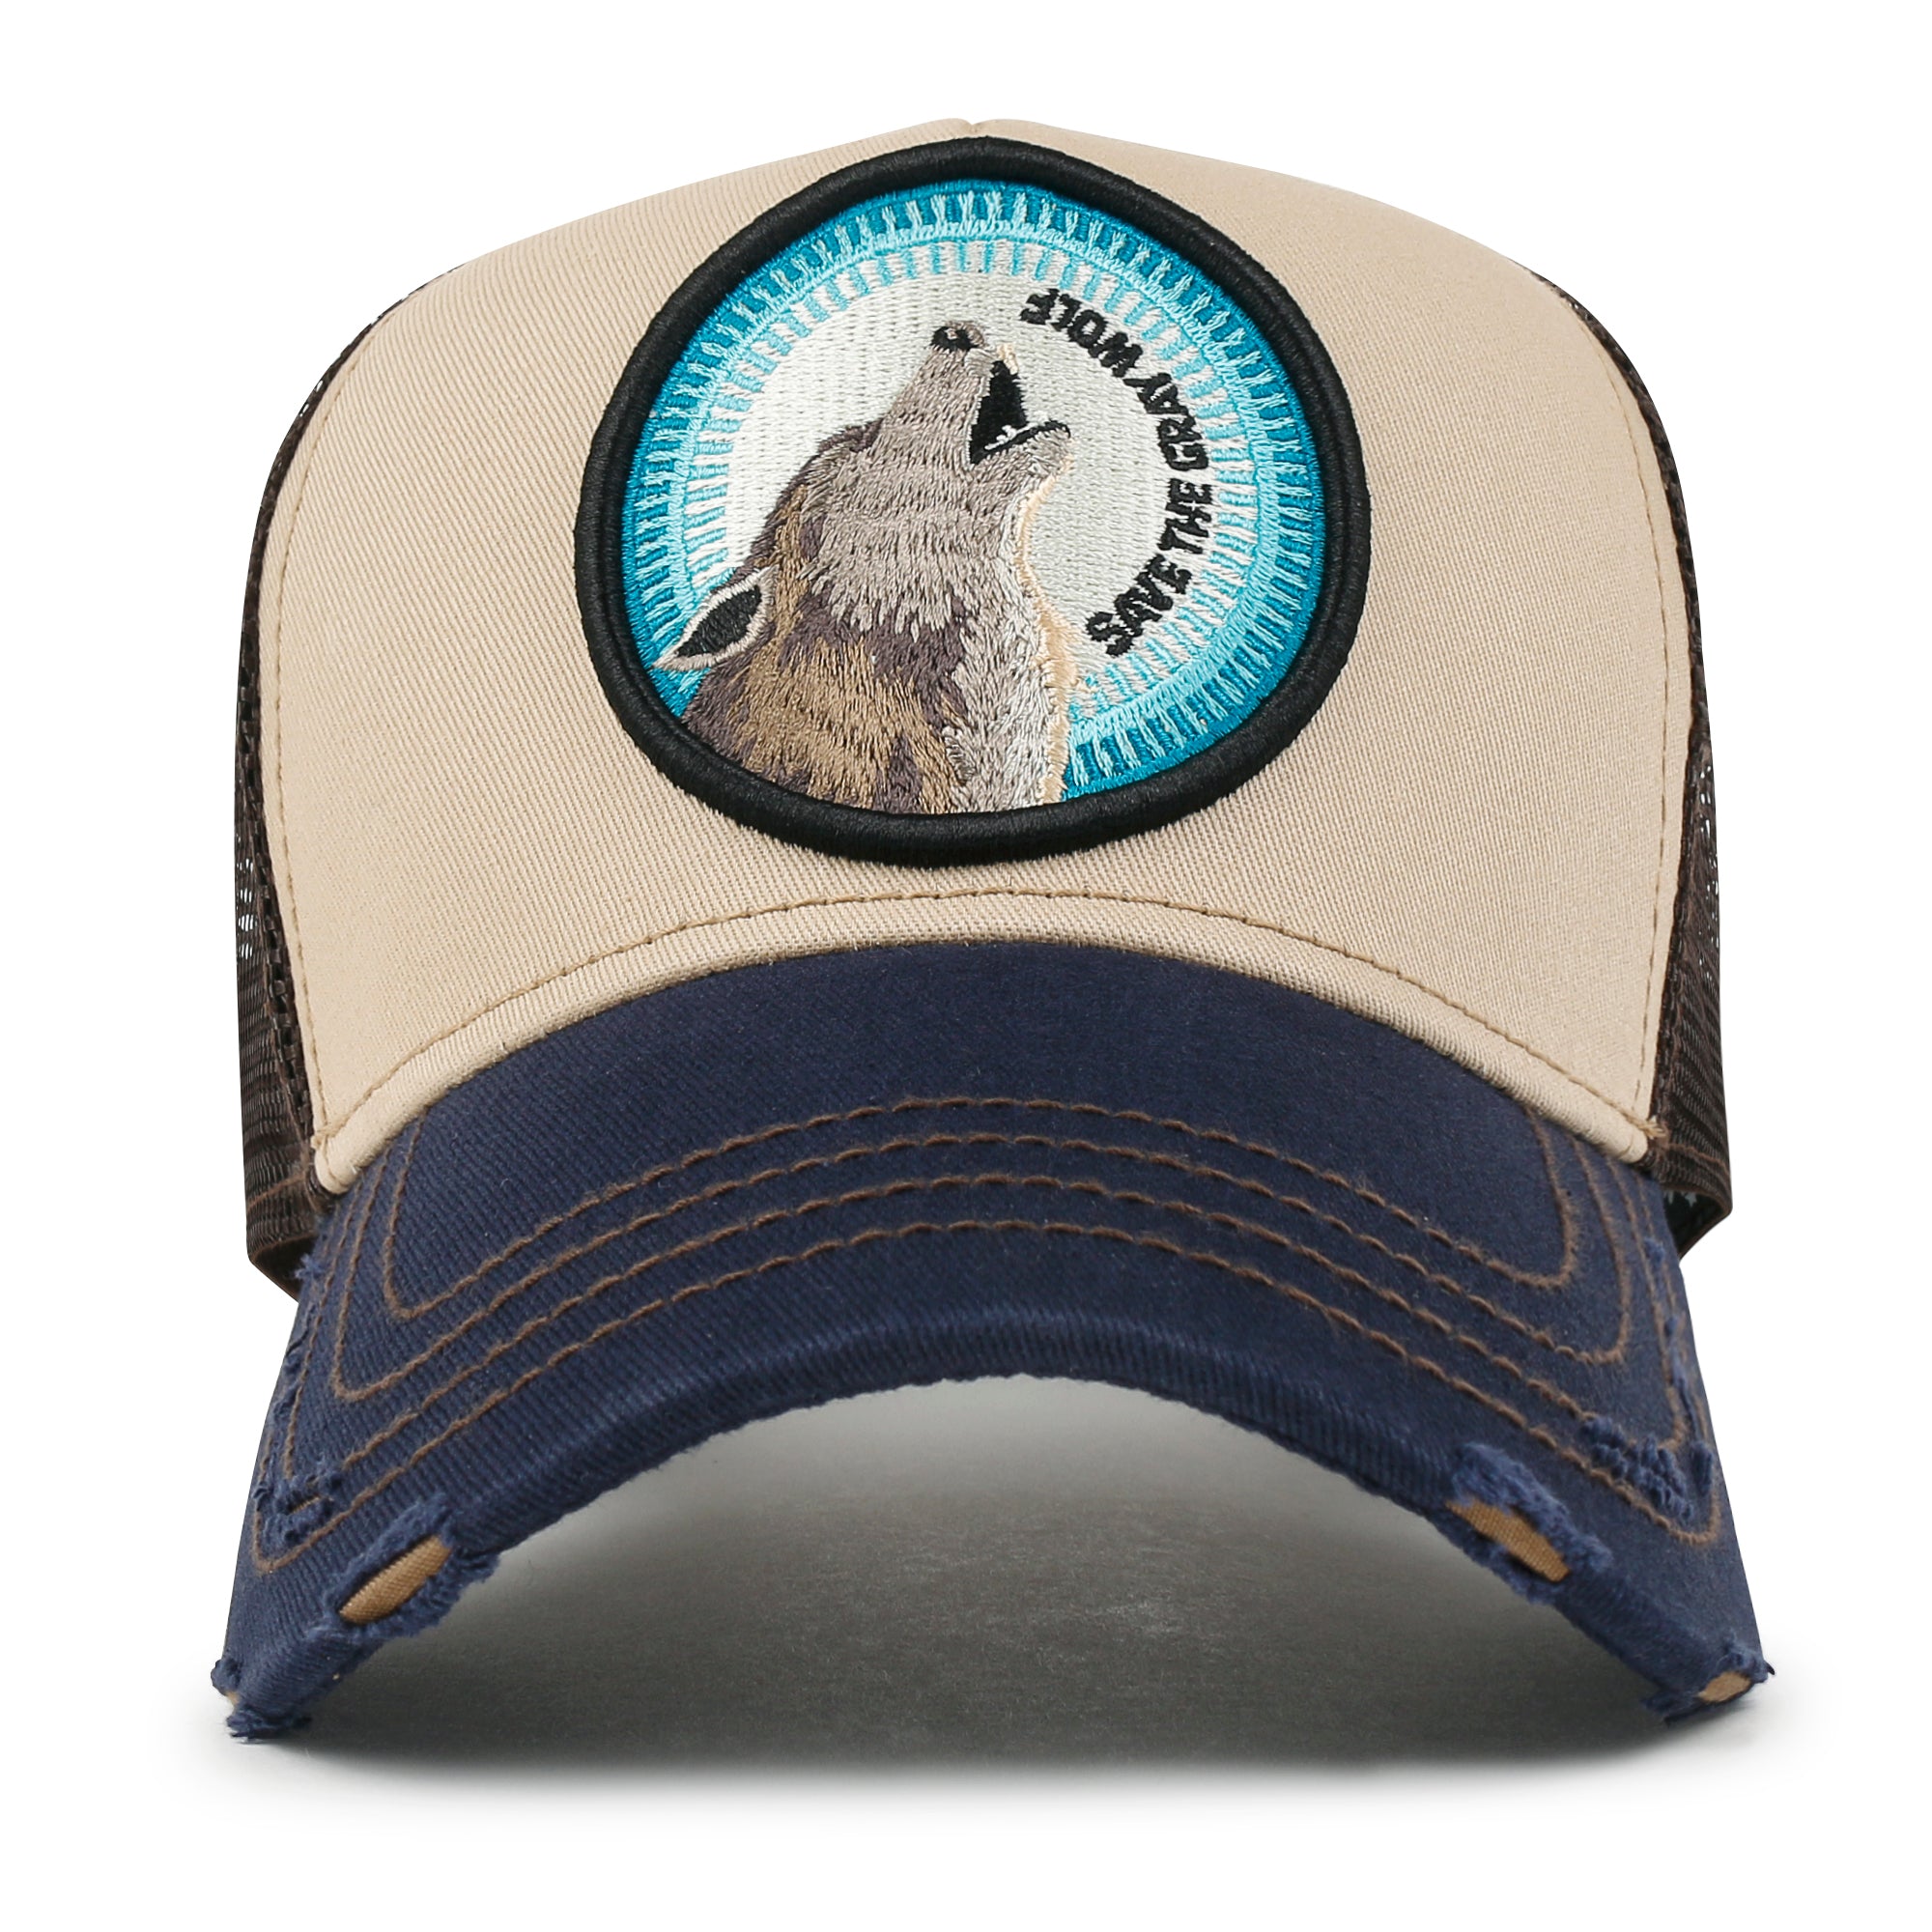 Luxury Raised Wolves Minimalist Baseball Cap Big Size Hat For Men And Women  From Belovseaya, $13.48